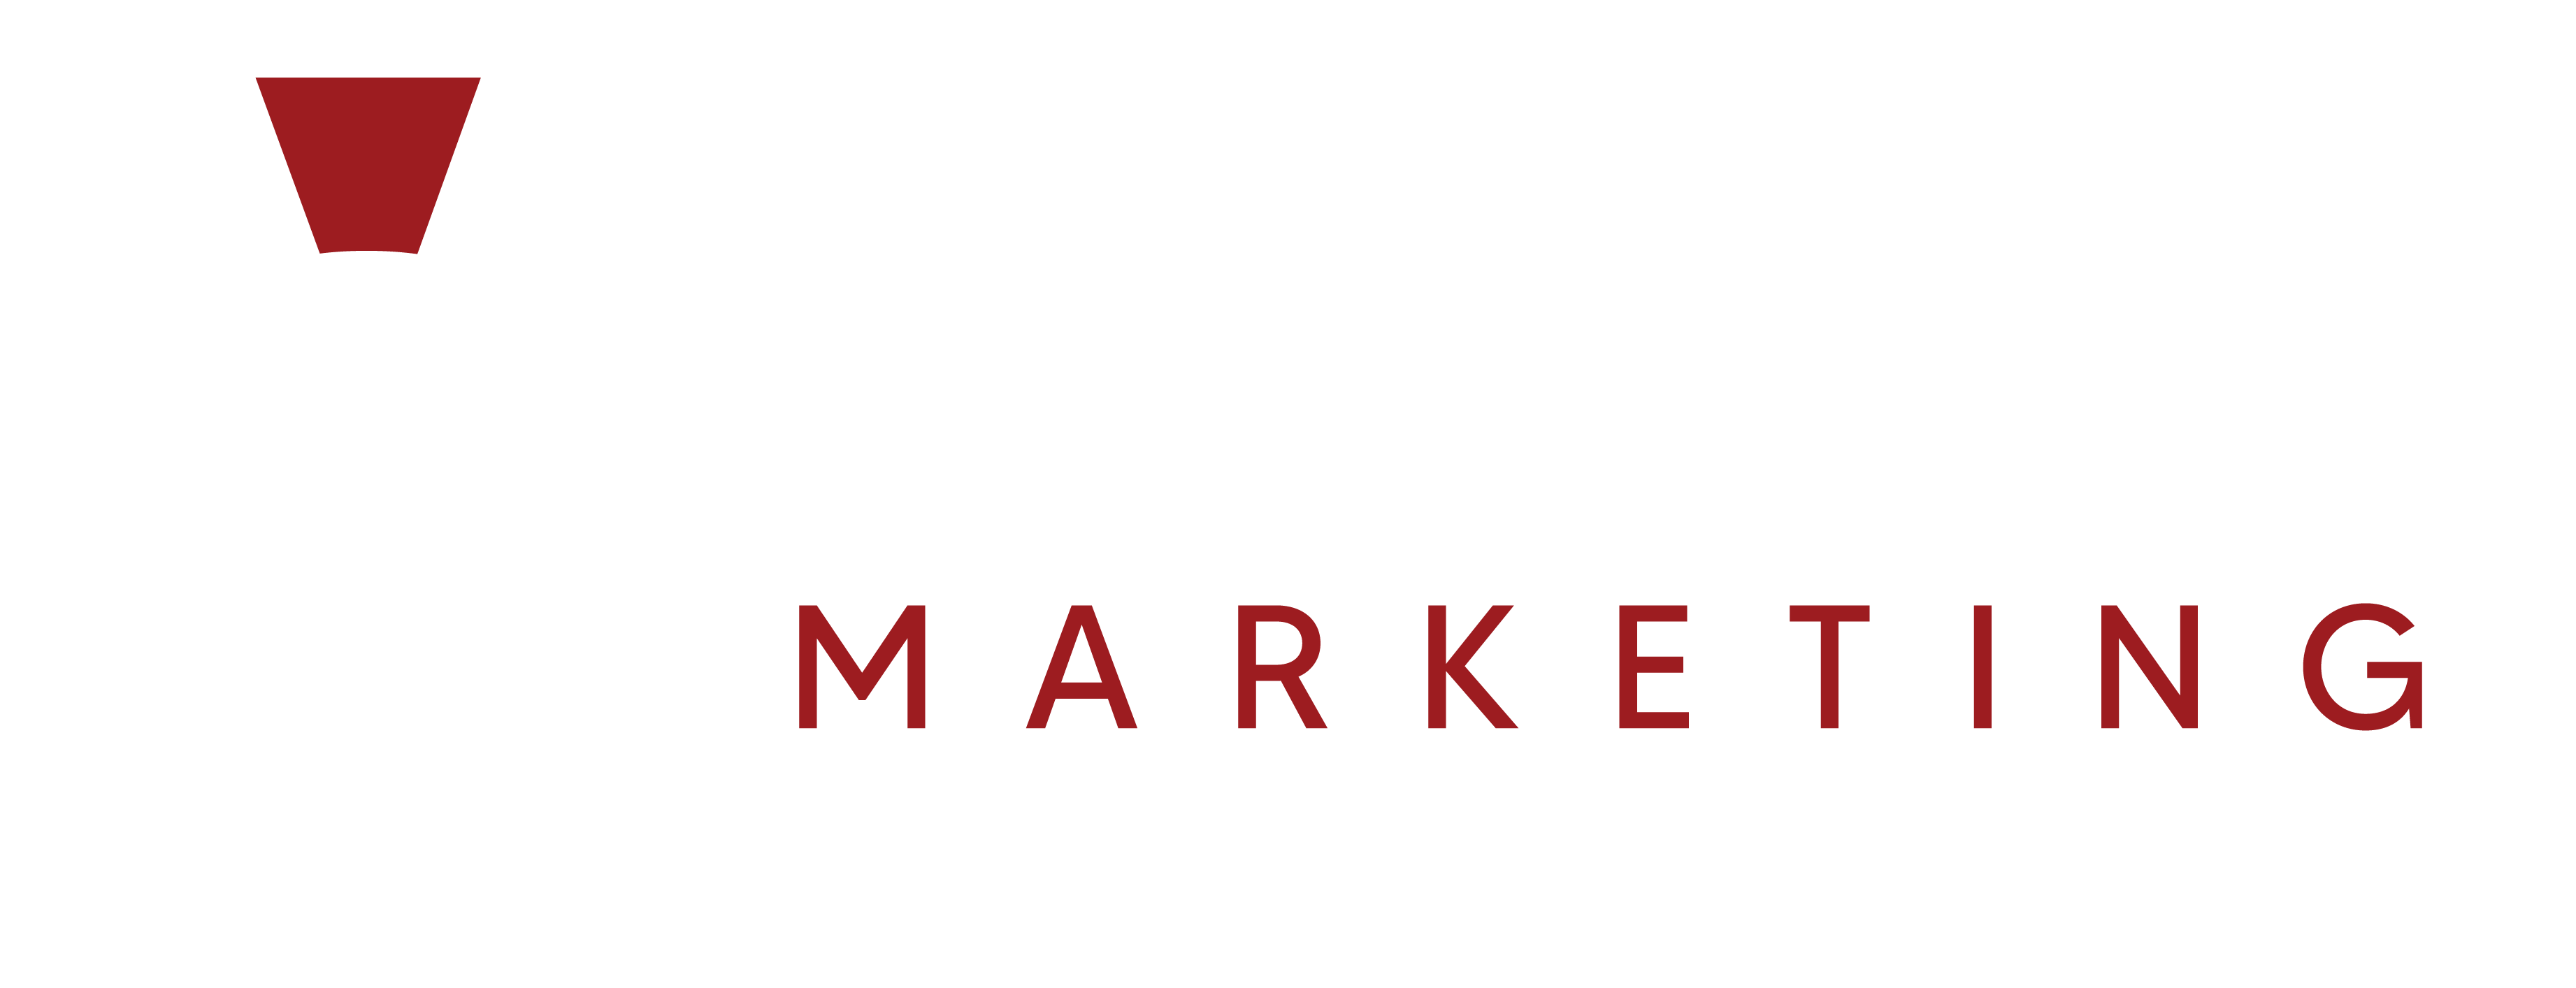 titans marketing logo